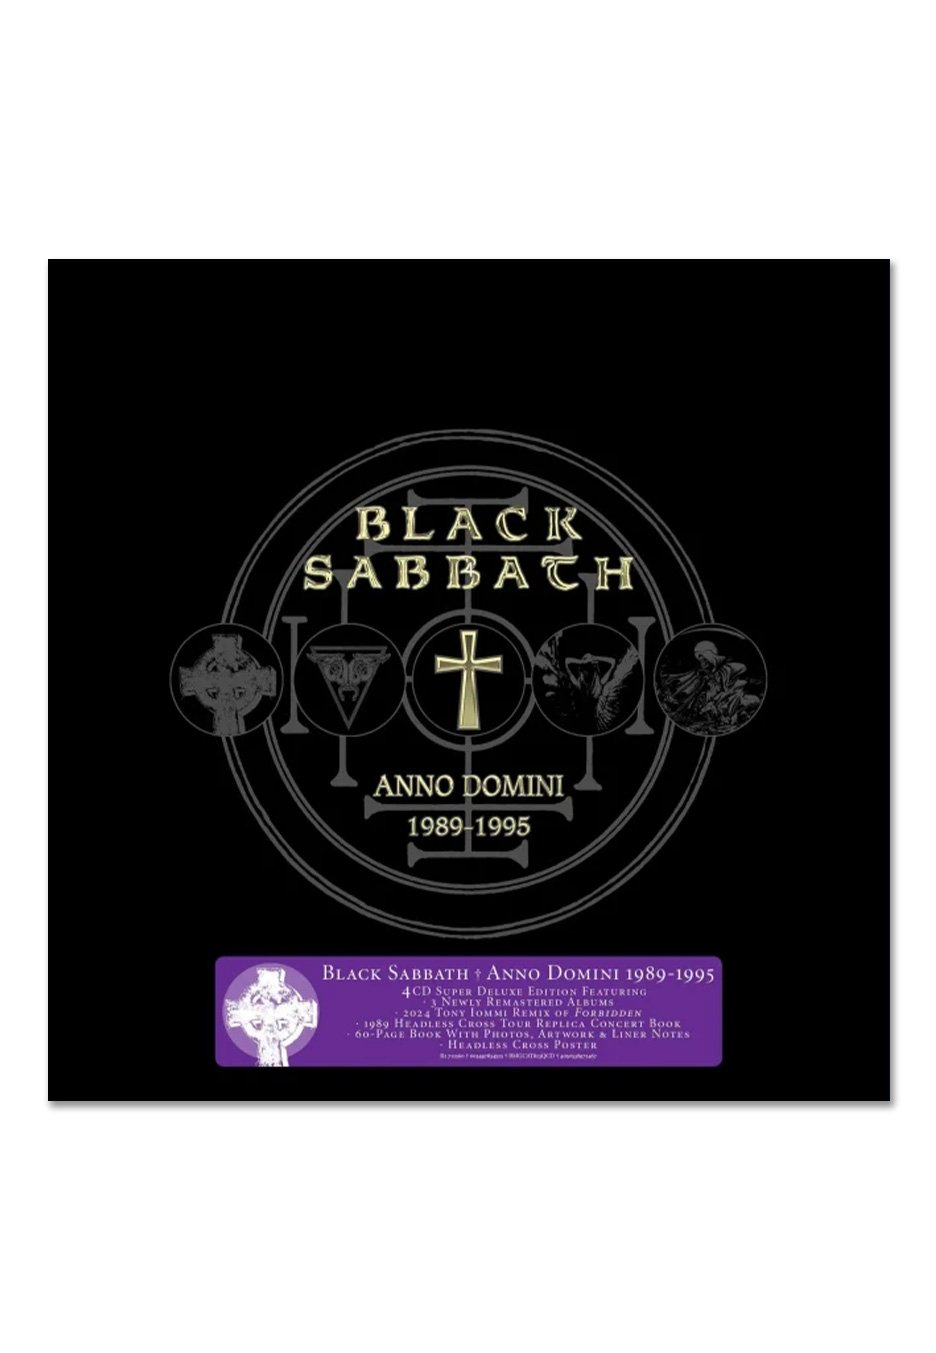 Black Sabbath - Anno Domini: 1989-1995 Ltd. - Vinyl Box Set